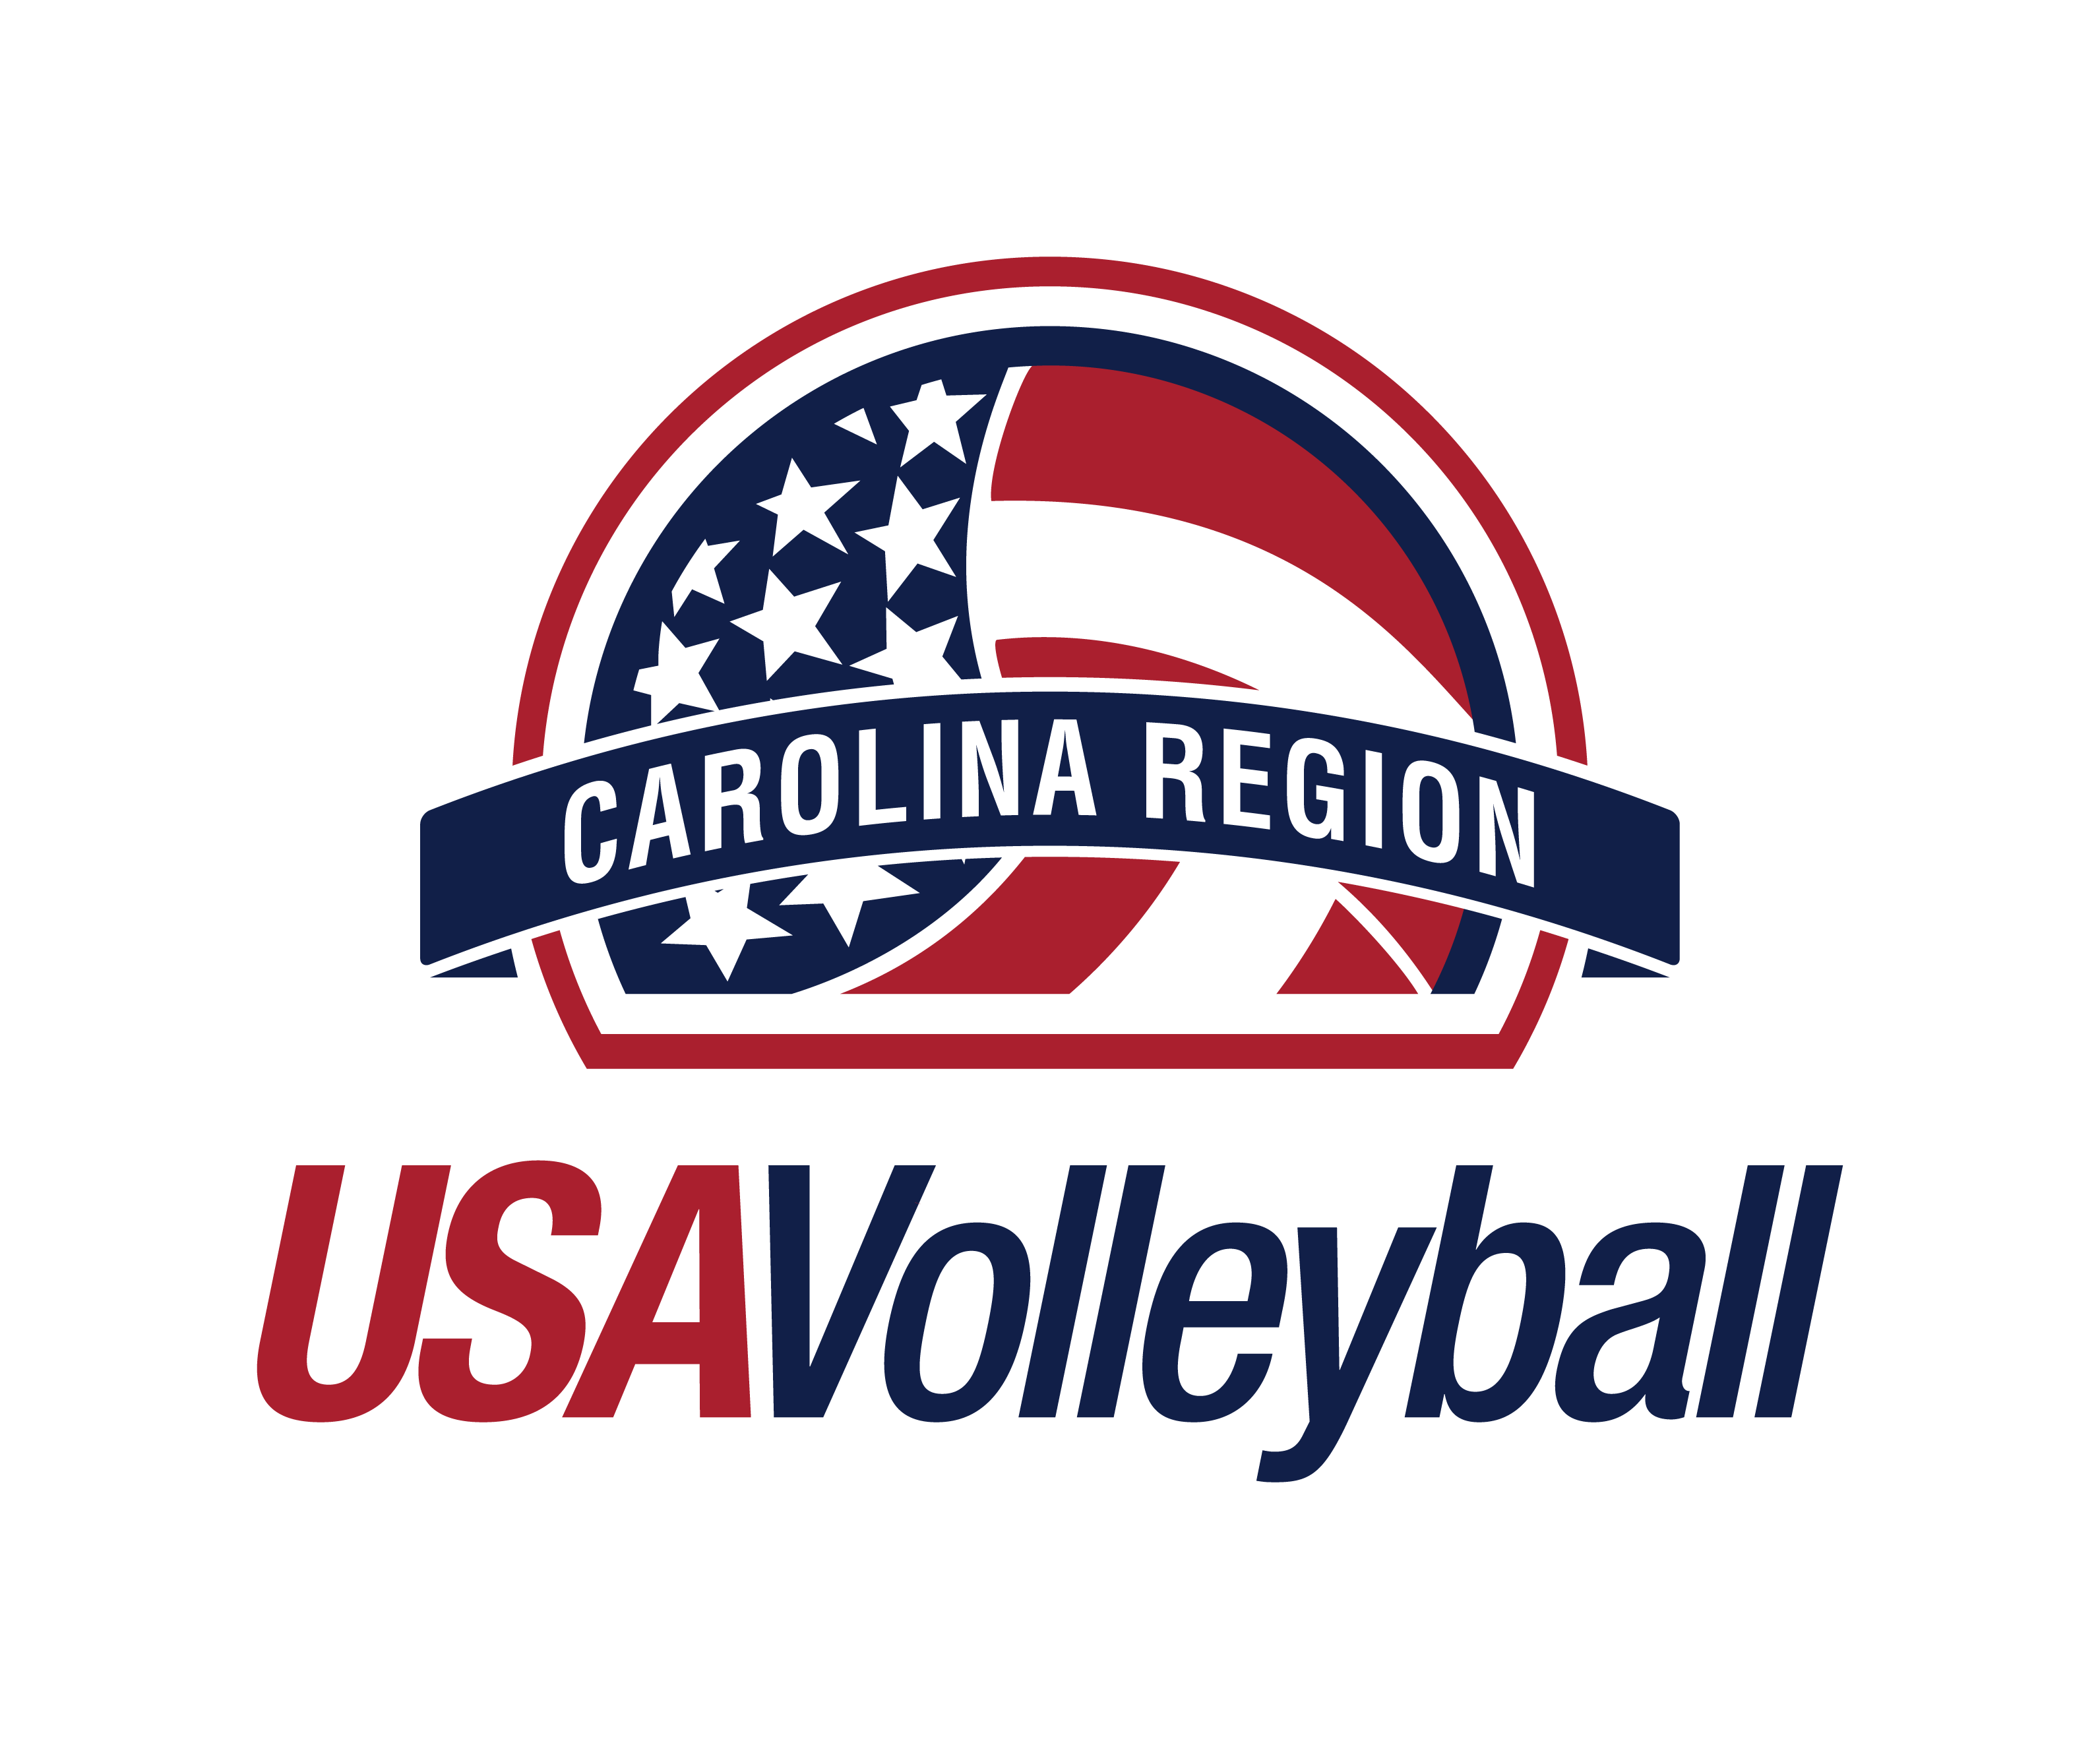 Carolina Region logo